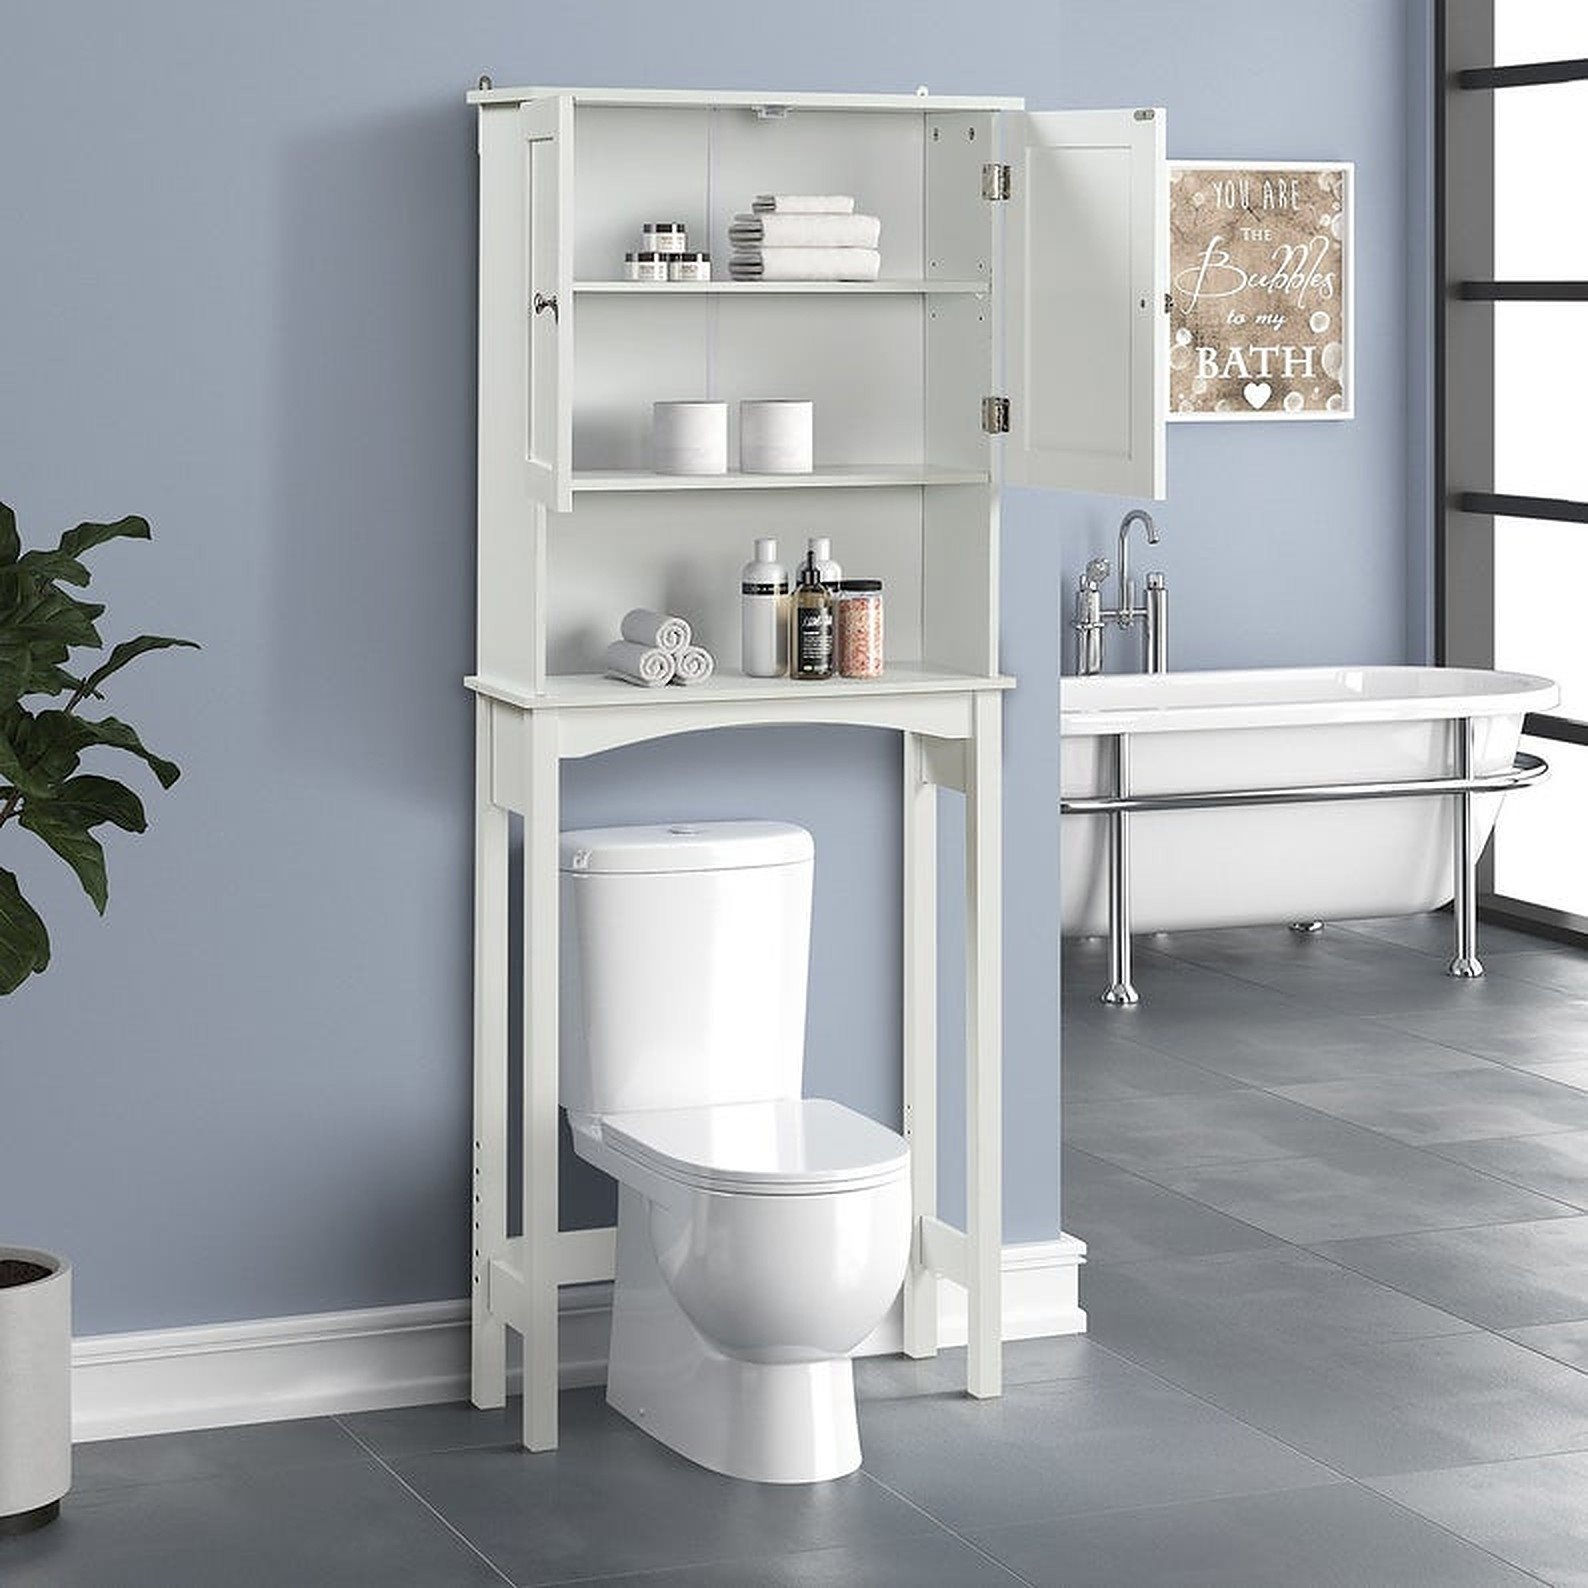 white-bathroom-fixtures-in-greyish-blue-wall-69761.jpg